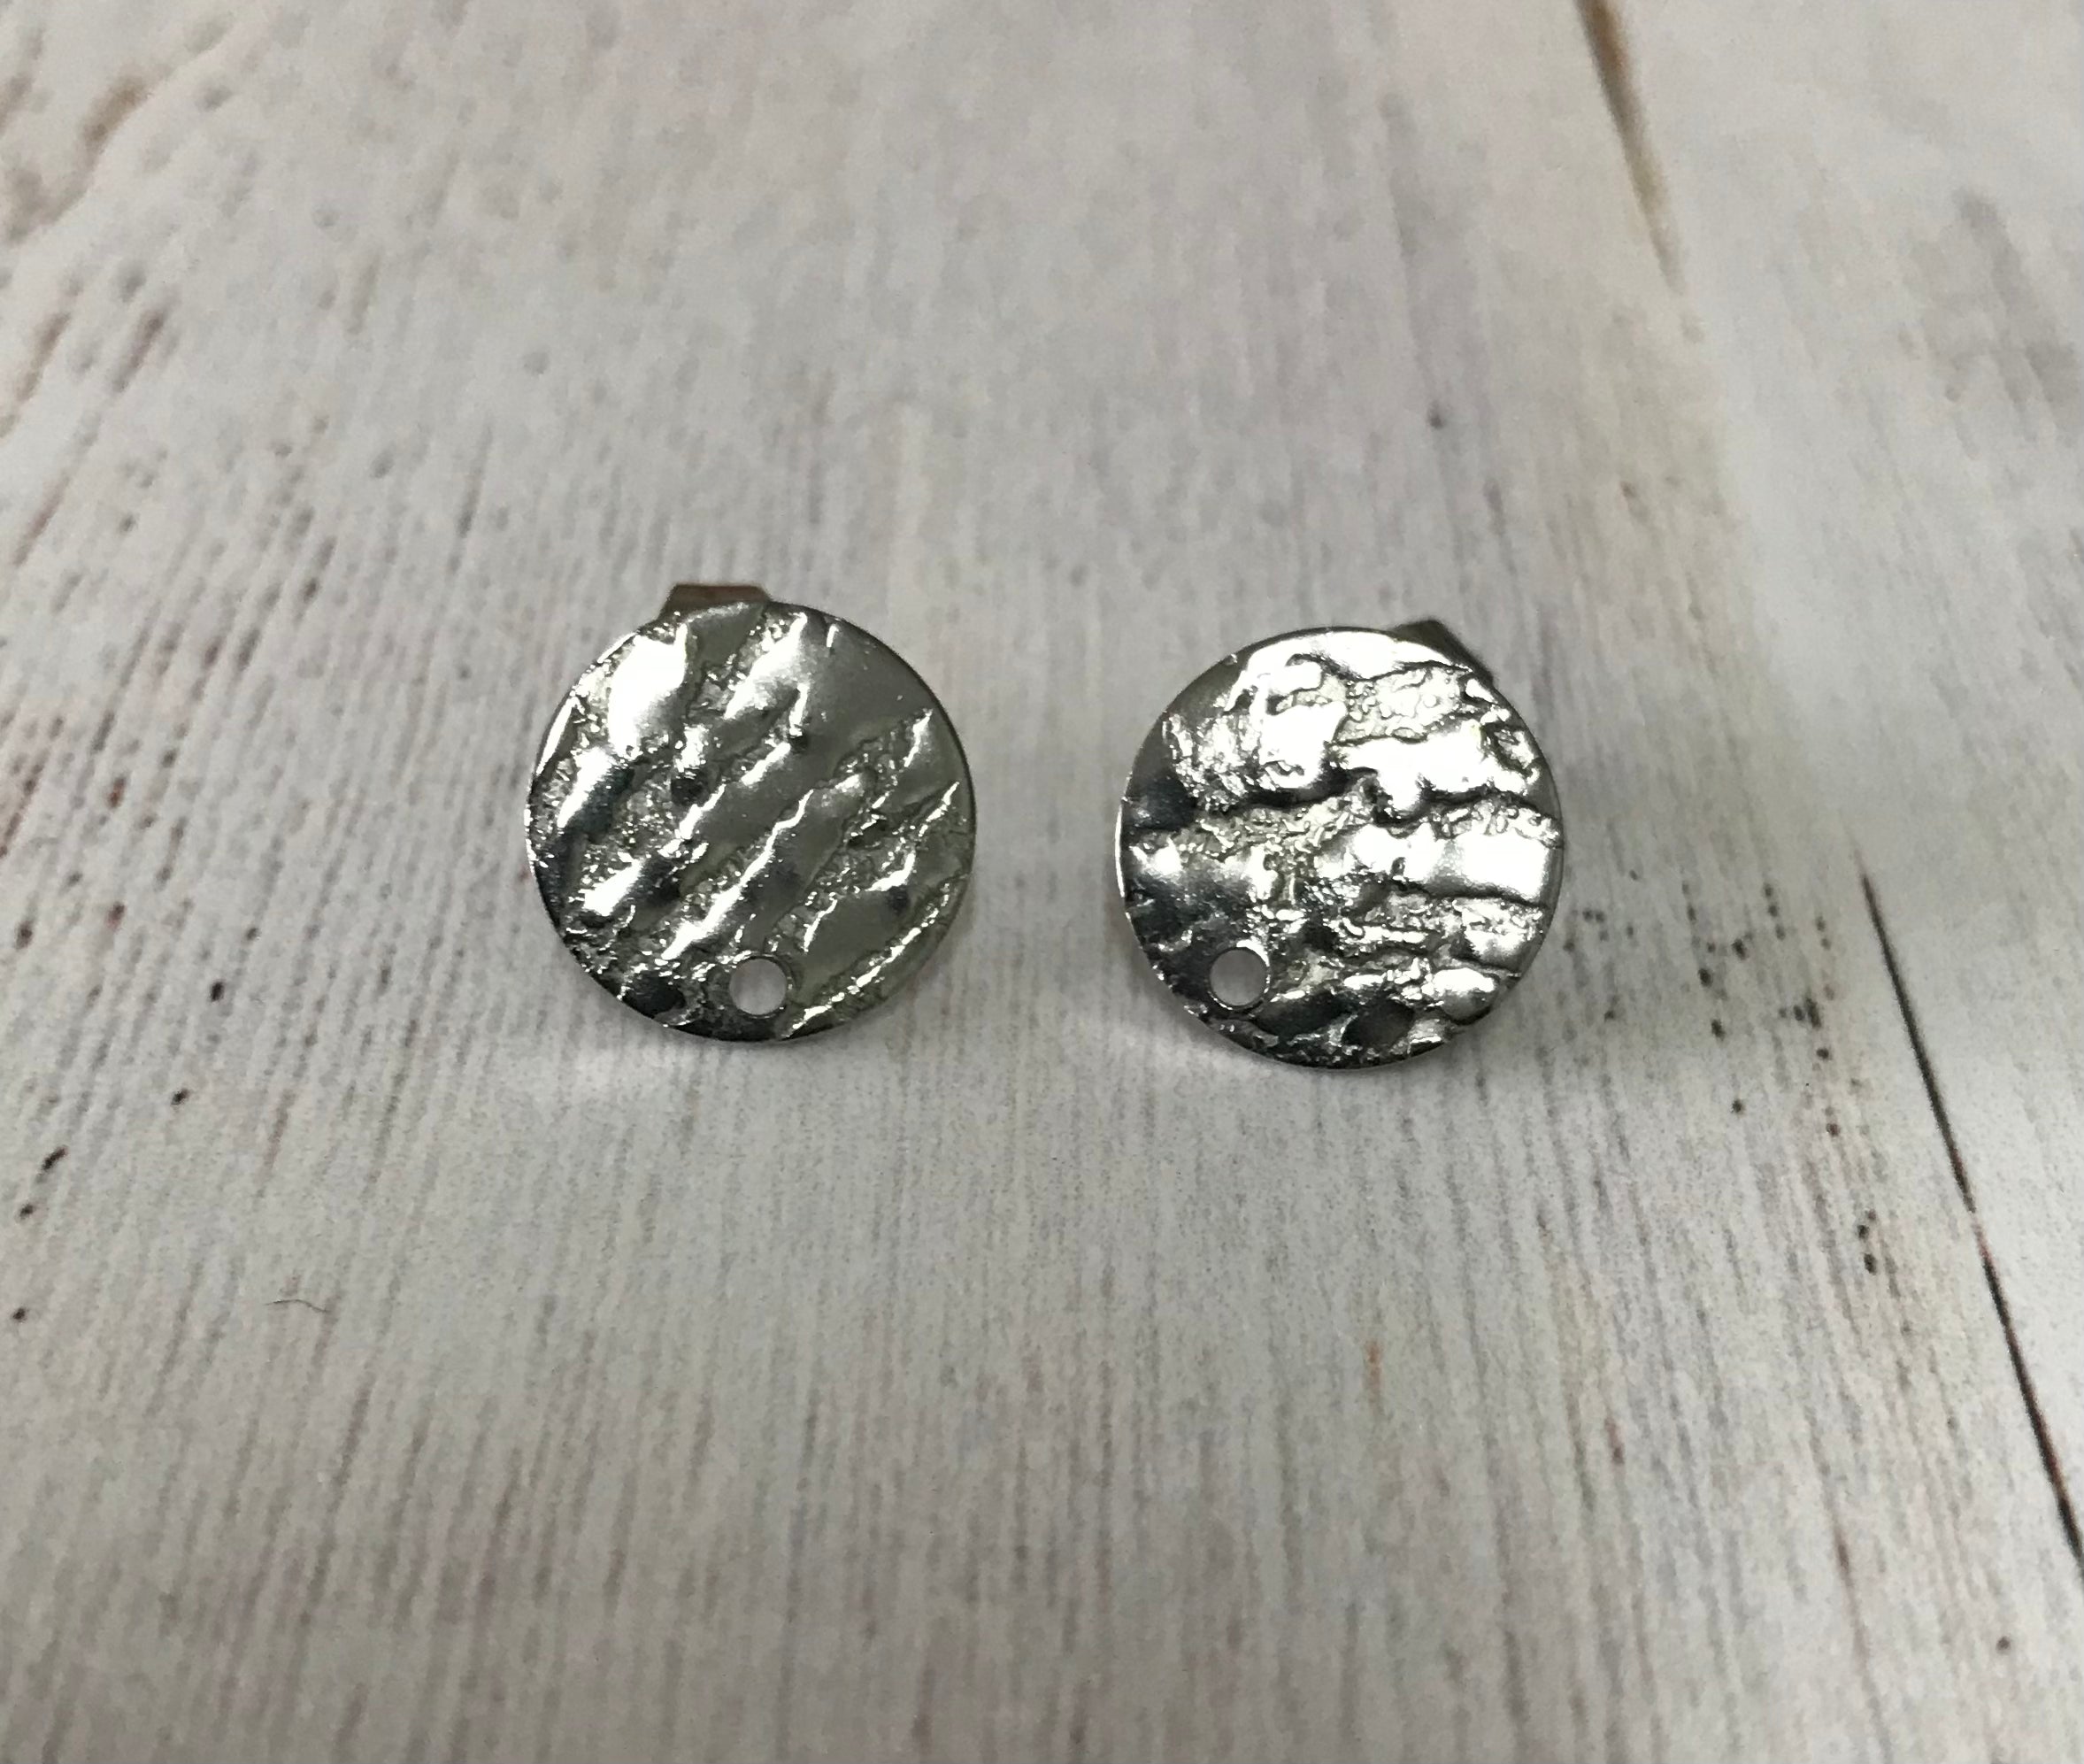 304 Stainless Steel Textured Stud Earrings with Ear Nut (1 Pair)